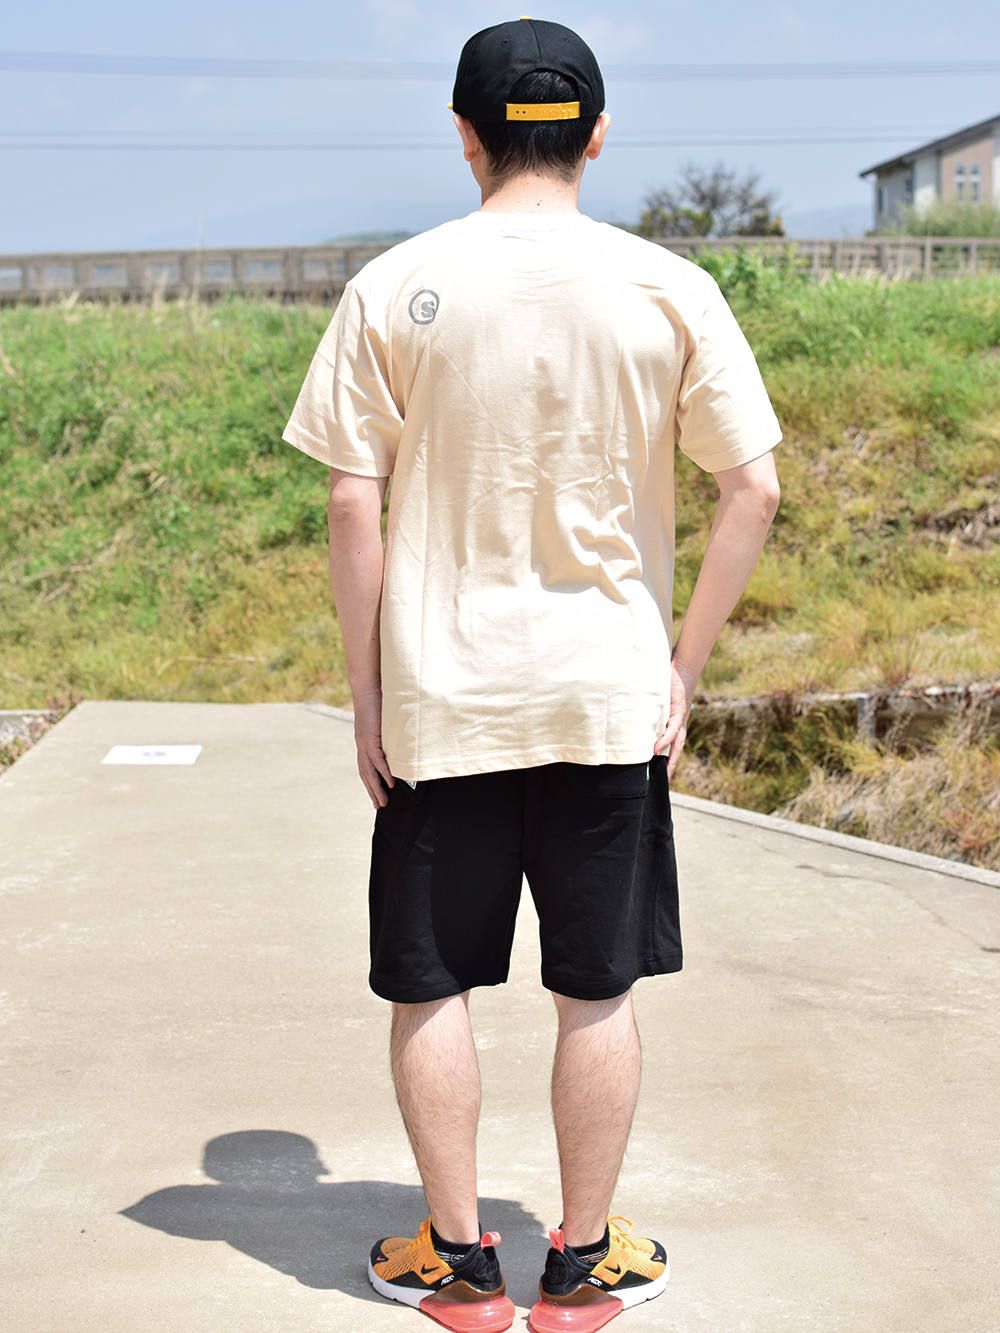 seedleSs - sd original stash pocket sweat shorts | DOLL